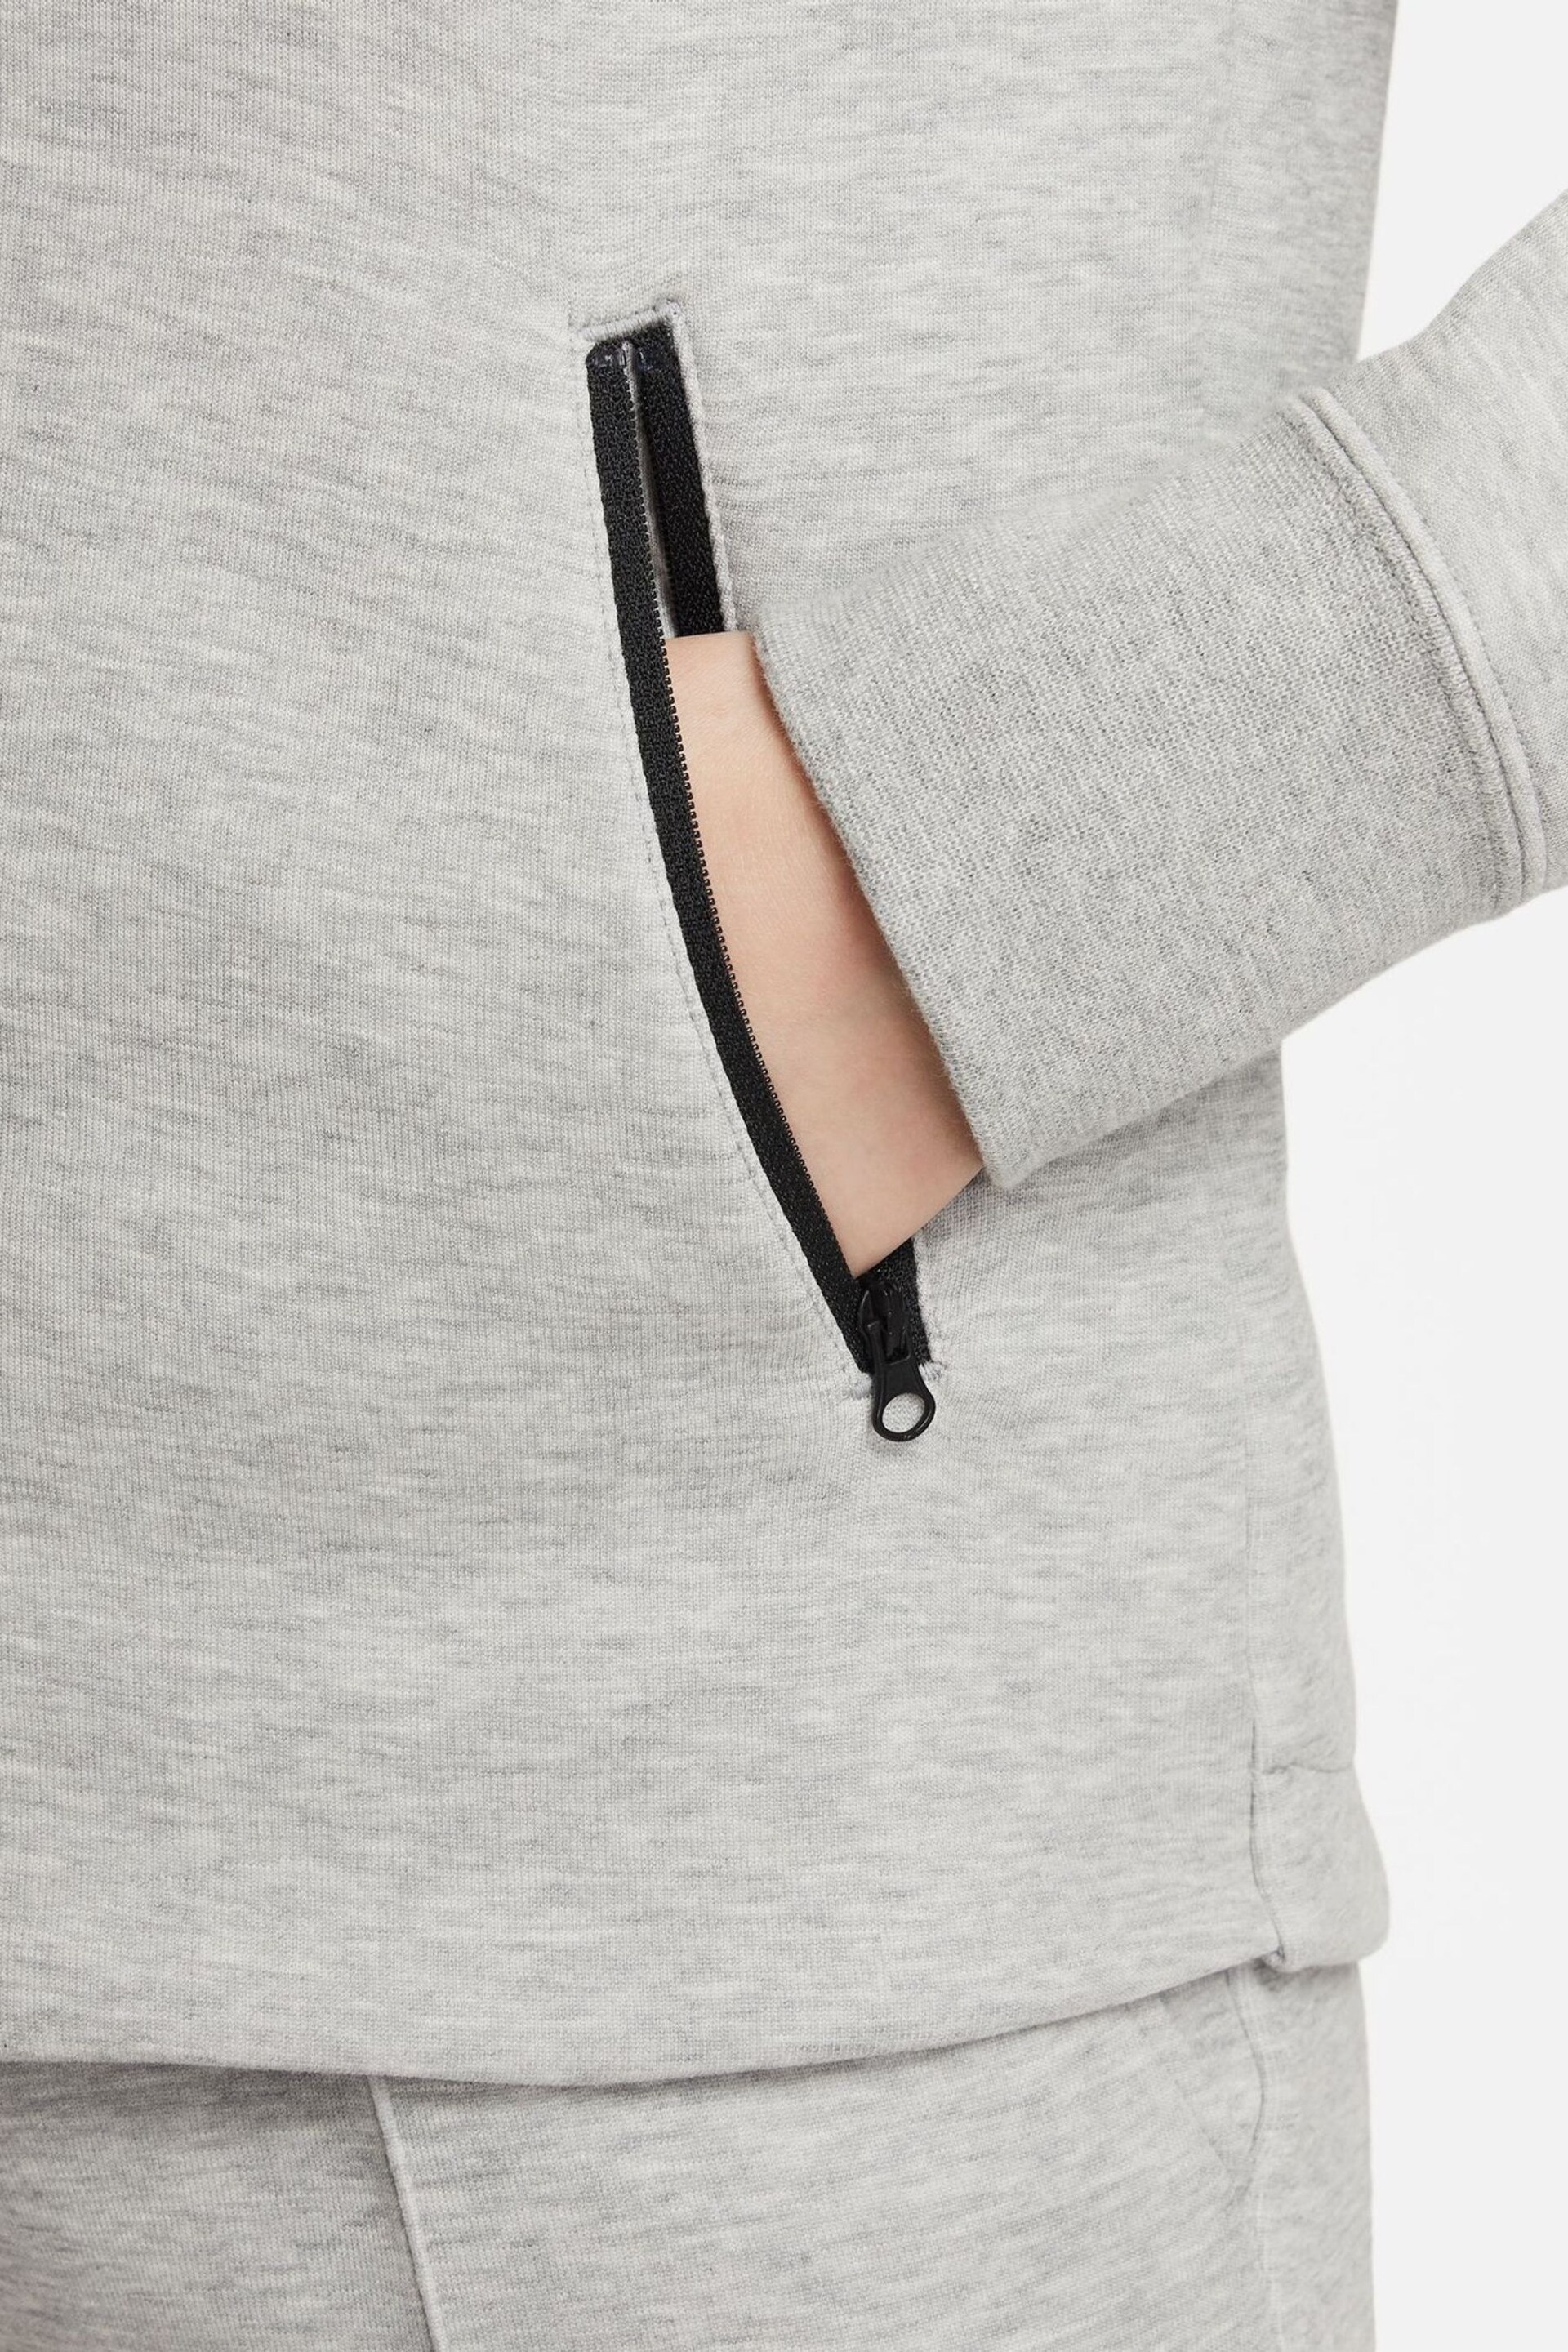 Nike Grey Tech Fleece Zip Through Hoodie - Image 5 of 7